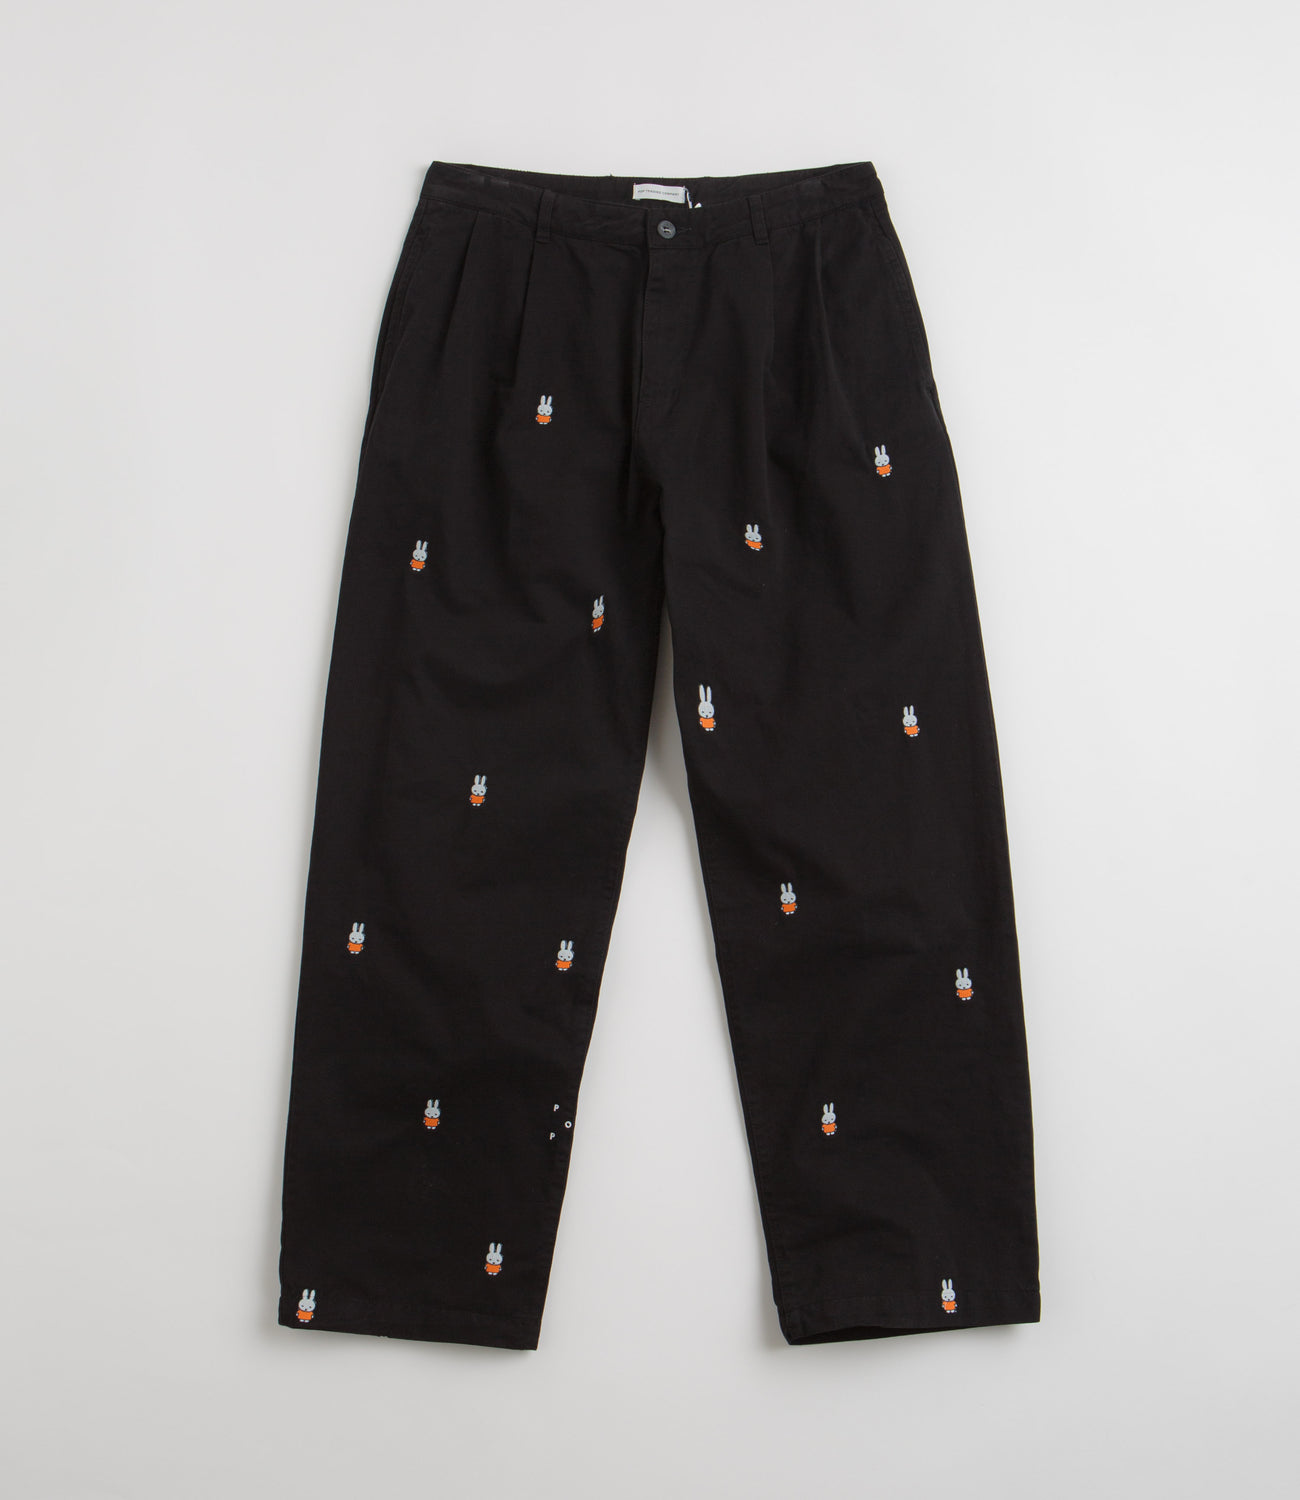 Pop Trading Company x Miffy Suit Pants - Black | Flatspot